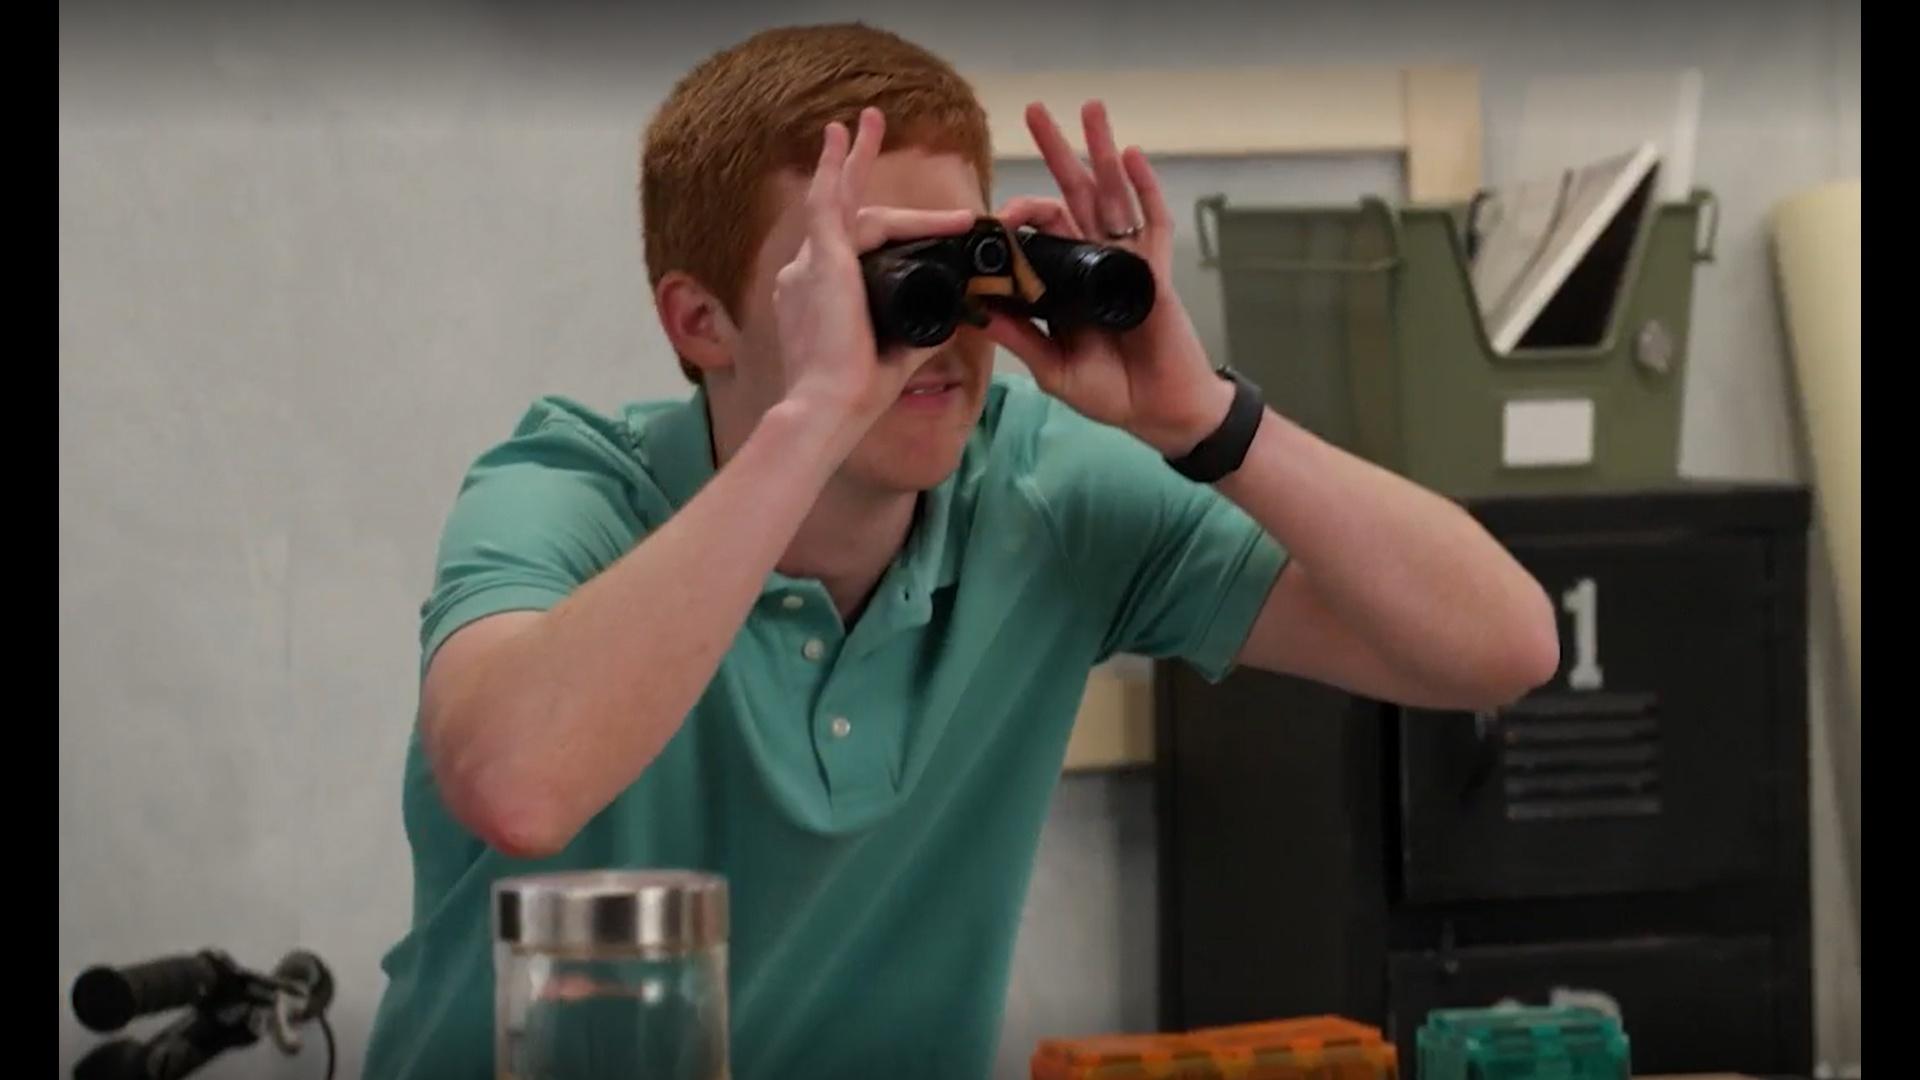 A man looks through binoculars.